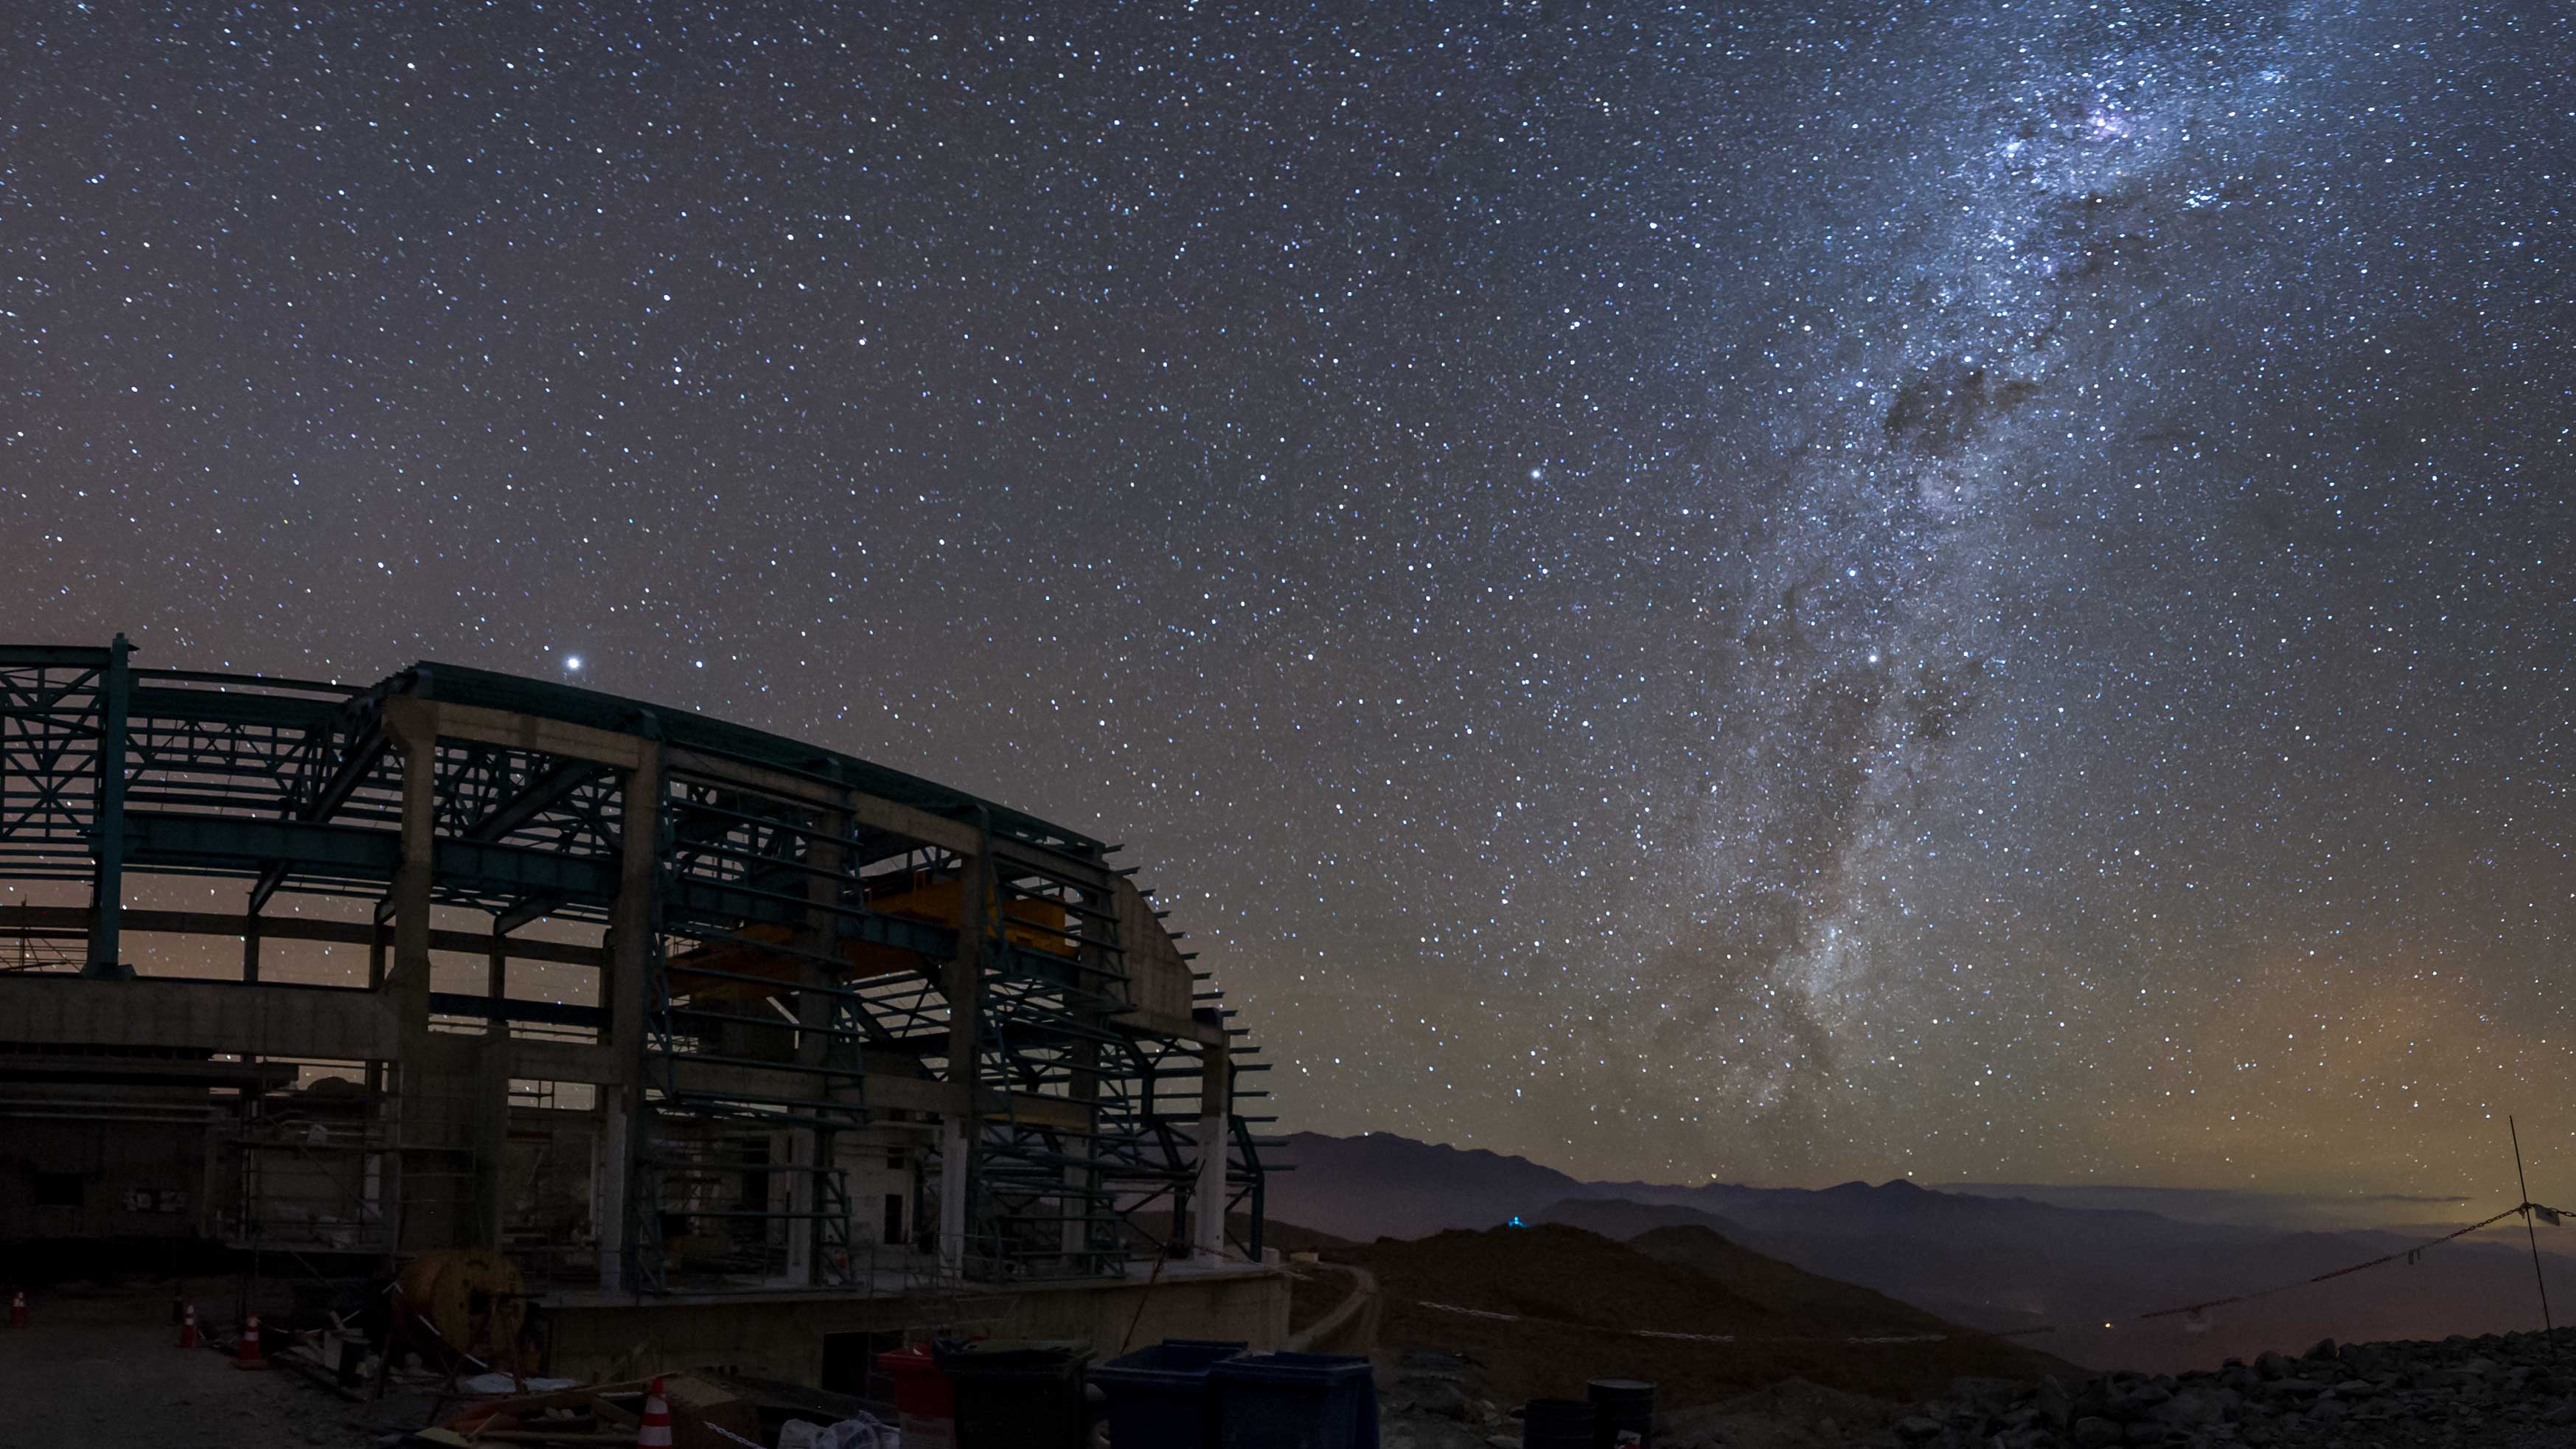 Large Synoptic Survey Telescope and Milky Way